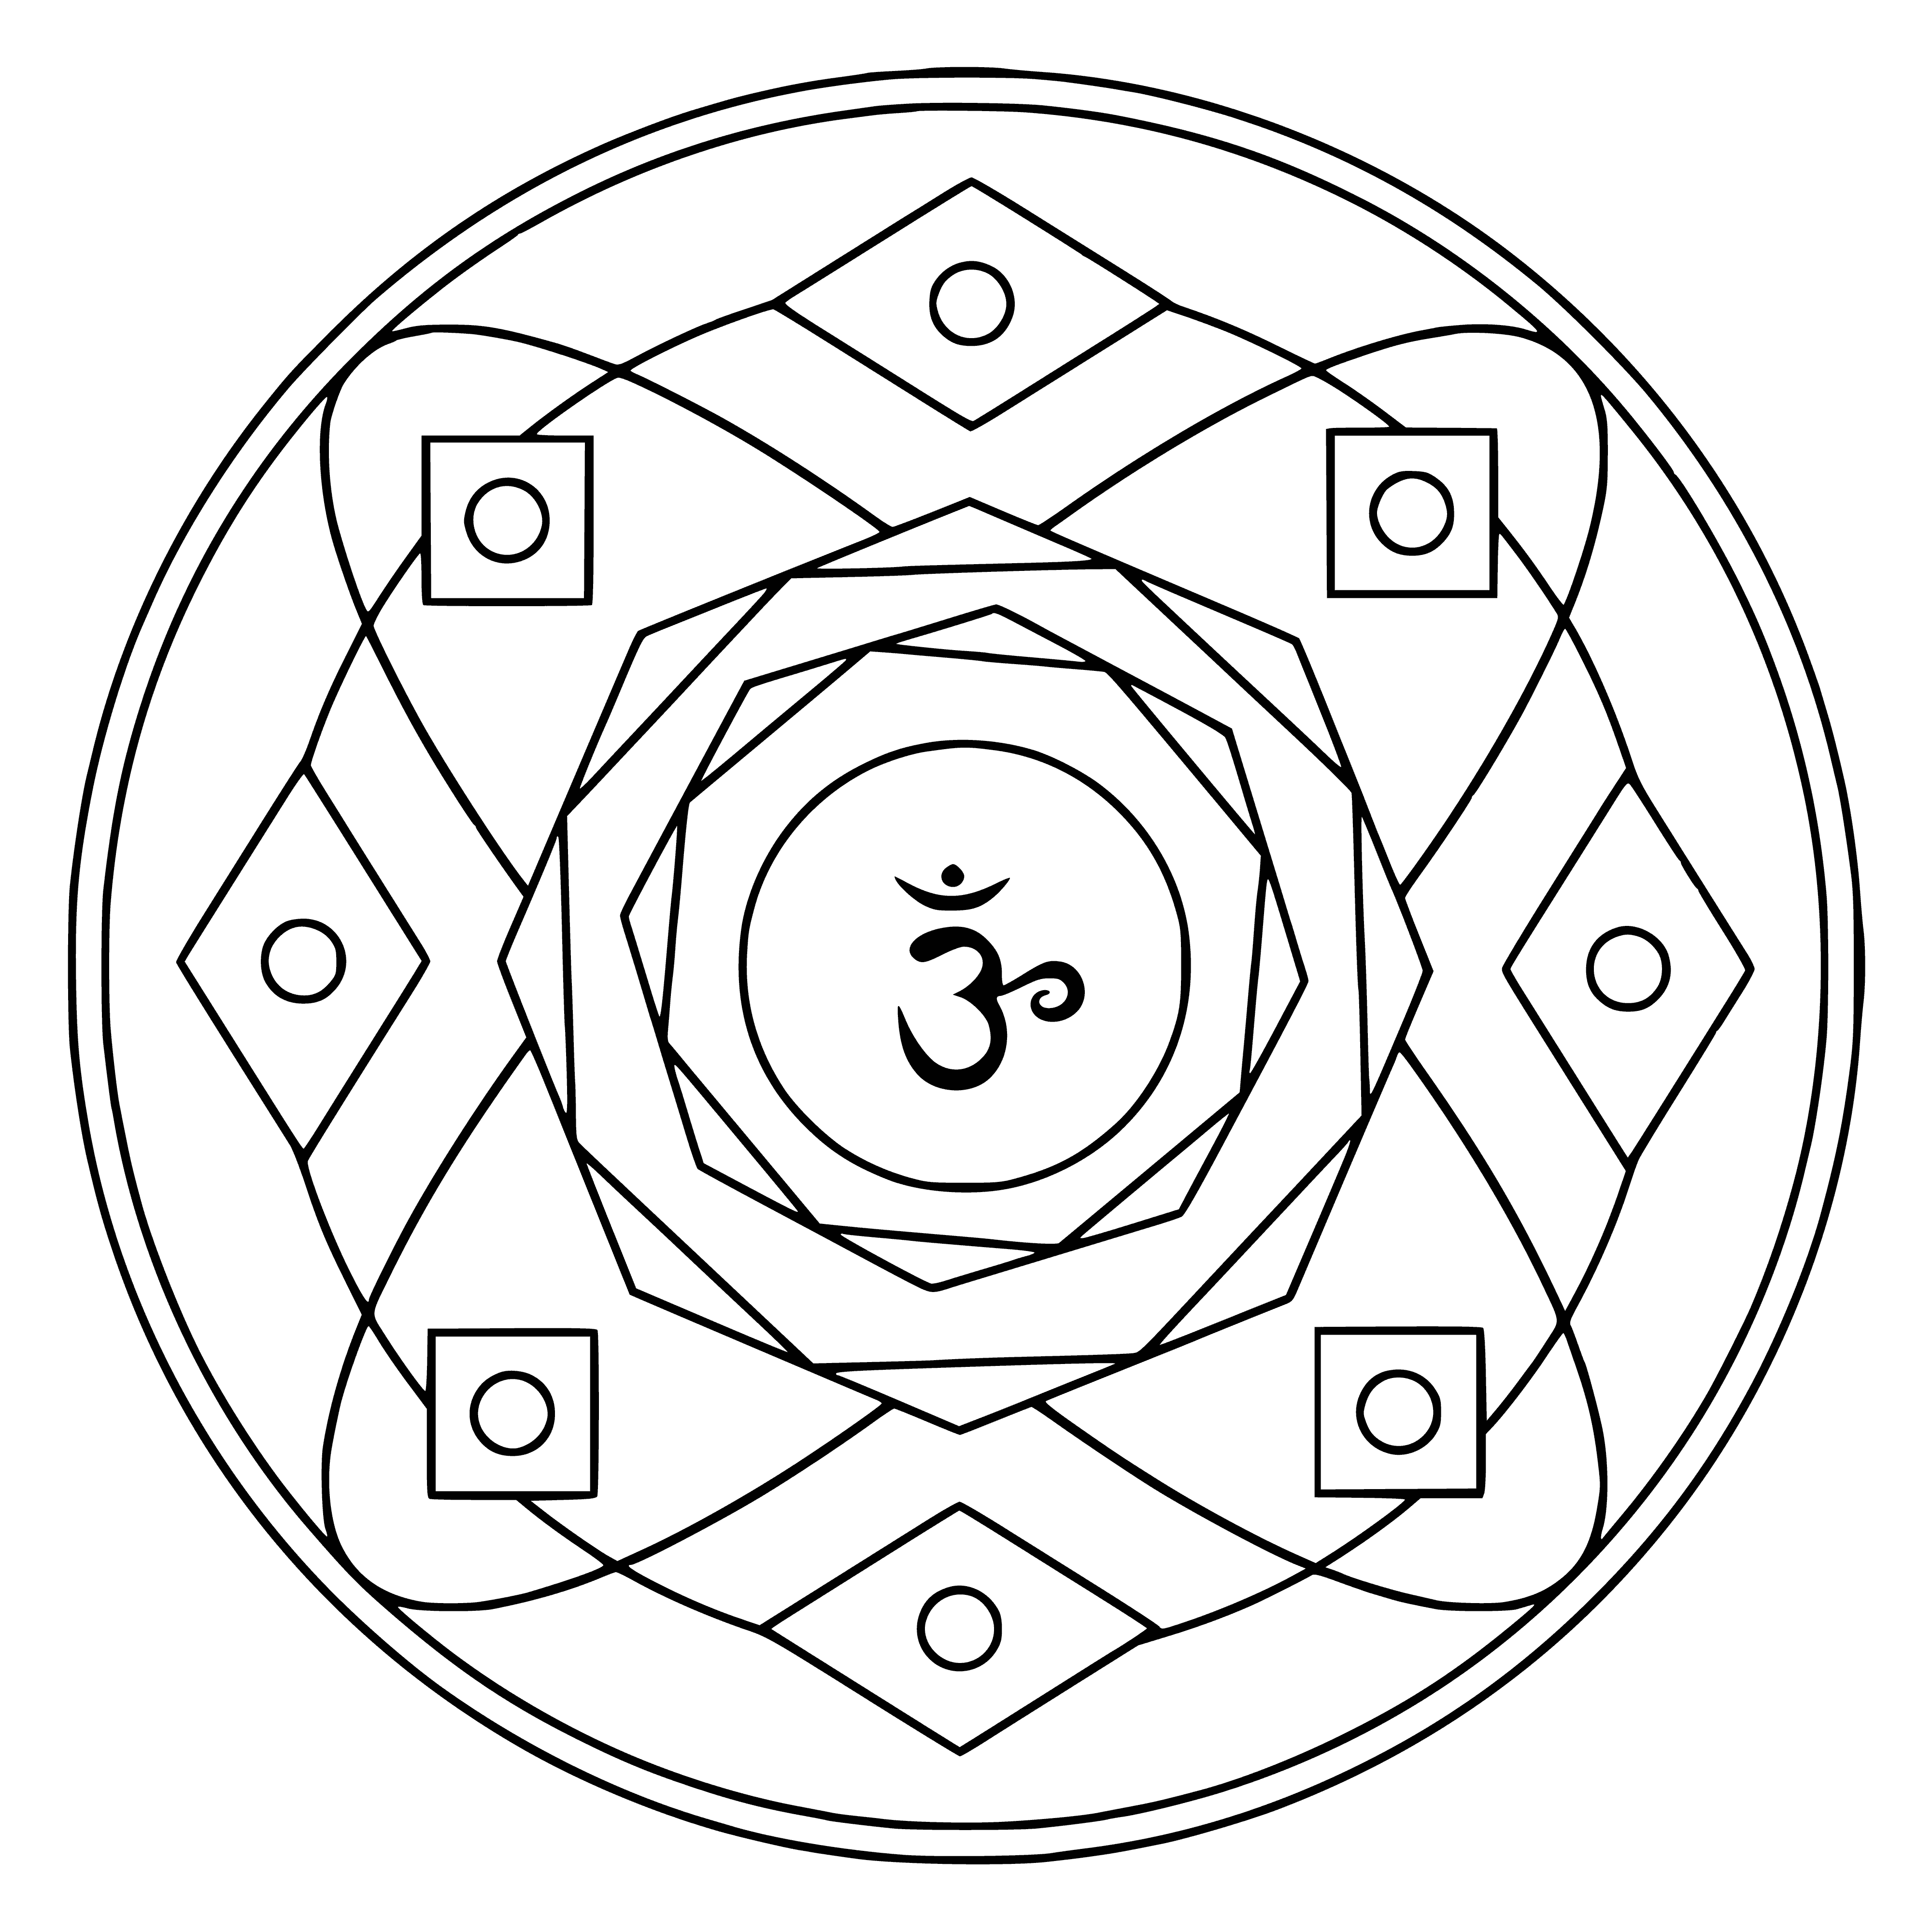 Mandala z symbolem Sahasrara kolorowanka